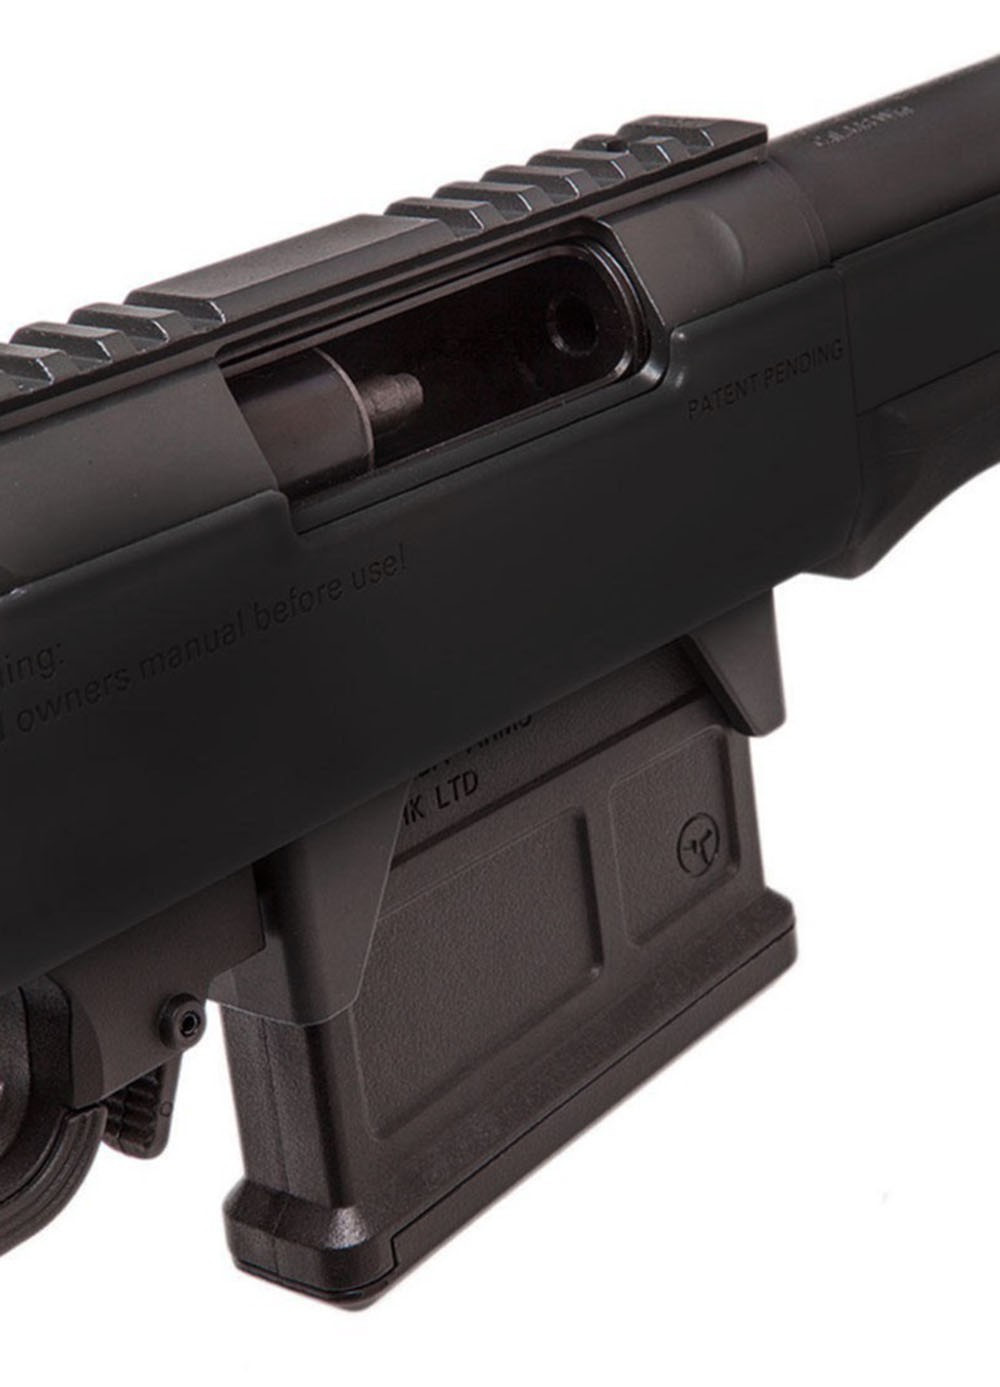 AMOEBA Striker AS-01 Sniper – Black Ops Paintball